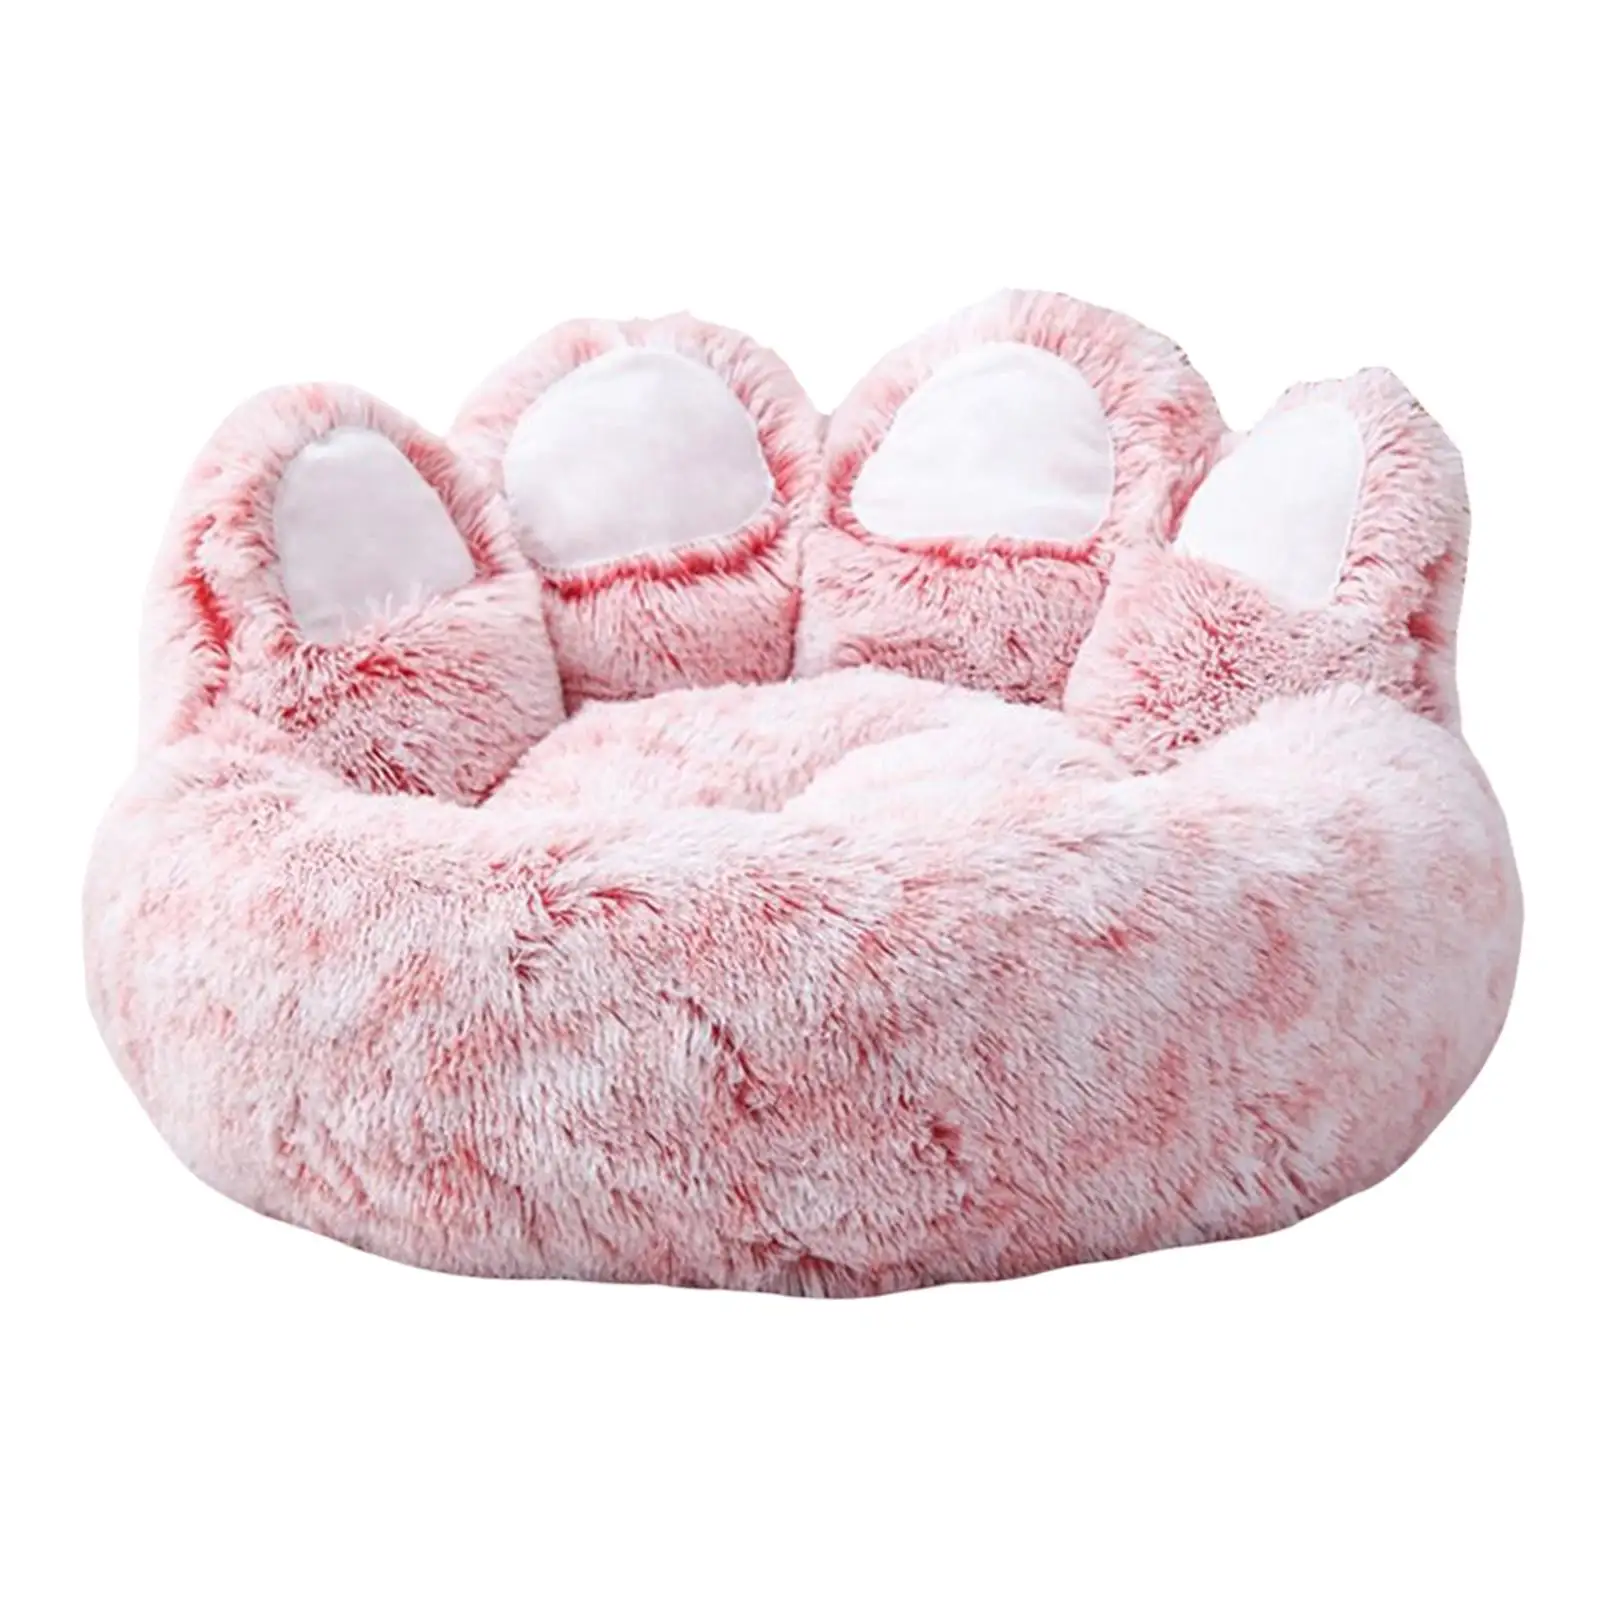 Plush Cat Warm House Dog Bed Small Medium Dog Nest Kitten Pet Puppy Blanket